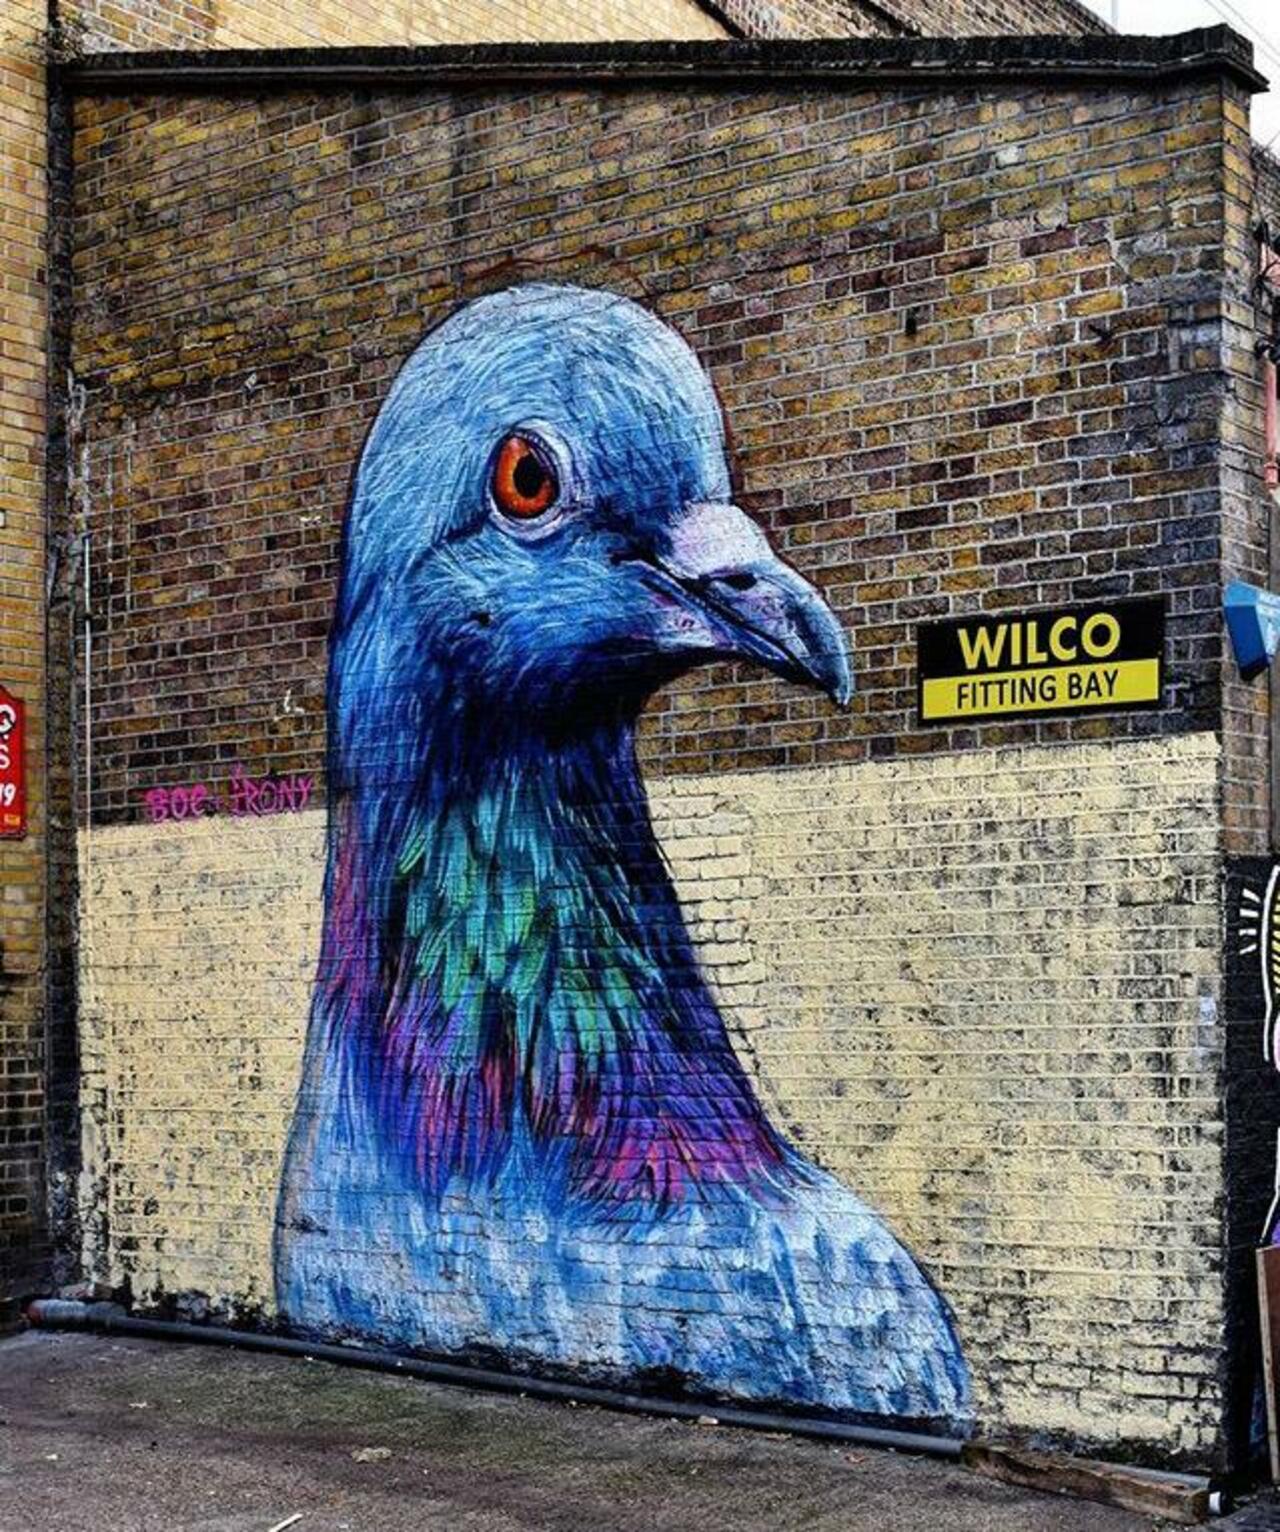 Street Art by Placee Boe & whoamirony in London 

#art #graffiti #mural #streetart http://t.co/KhnaTeyjc2